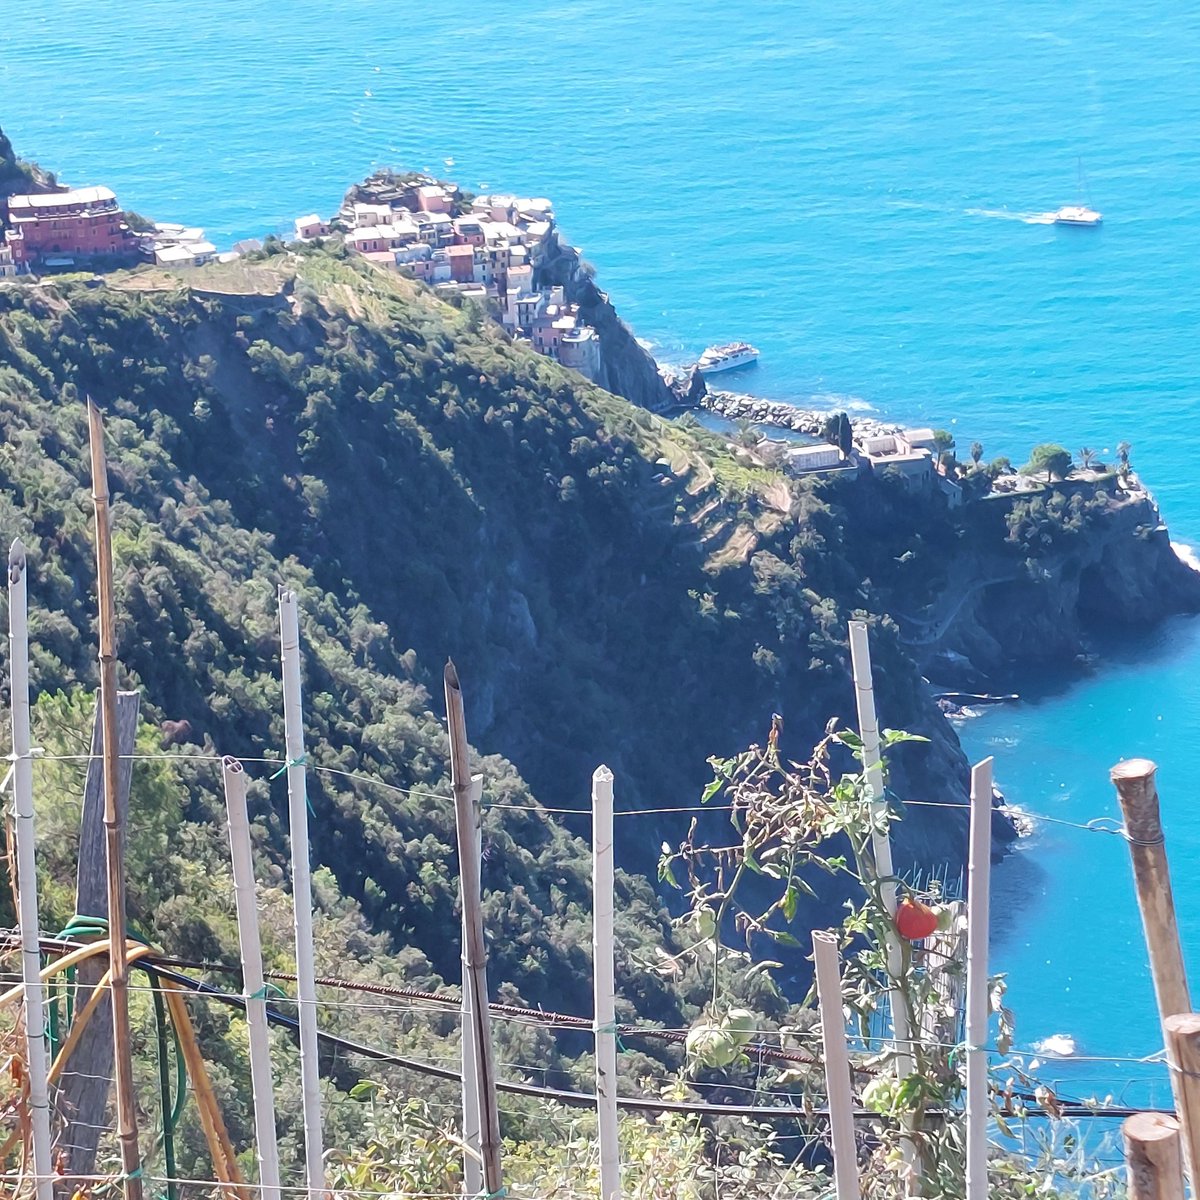 #Manarola #CinqueTerre #Liguria #Italy #18September #environnement